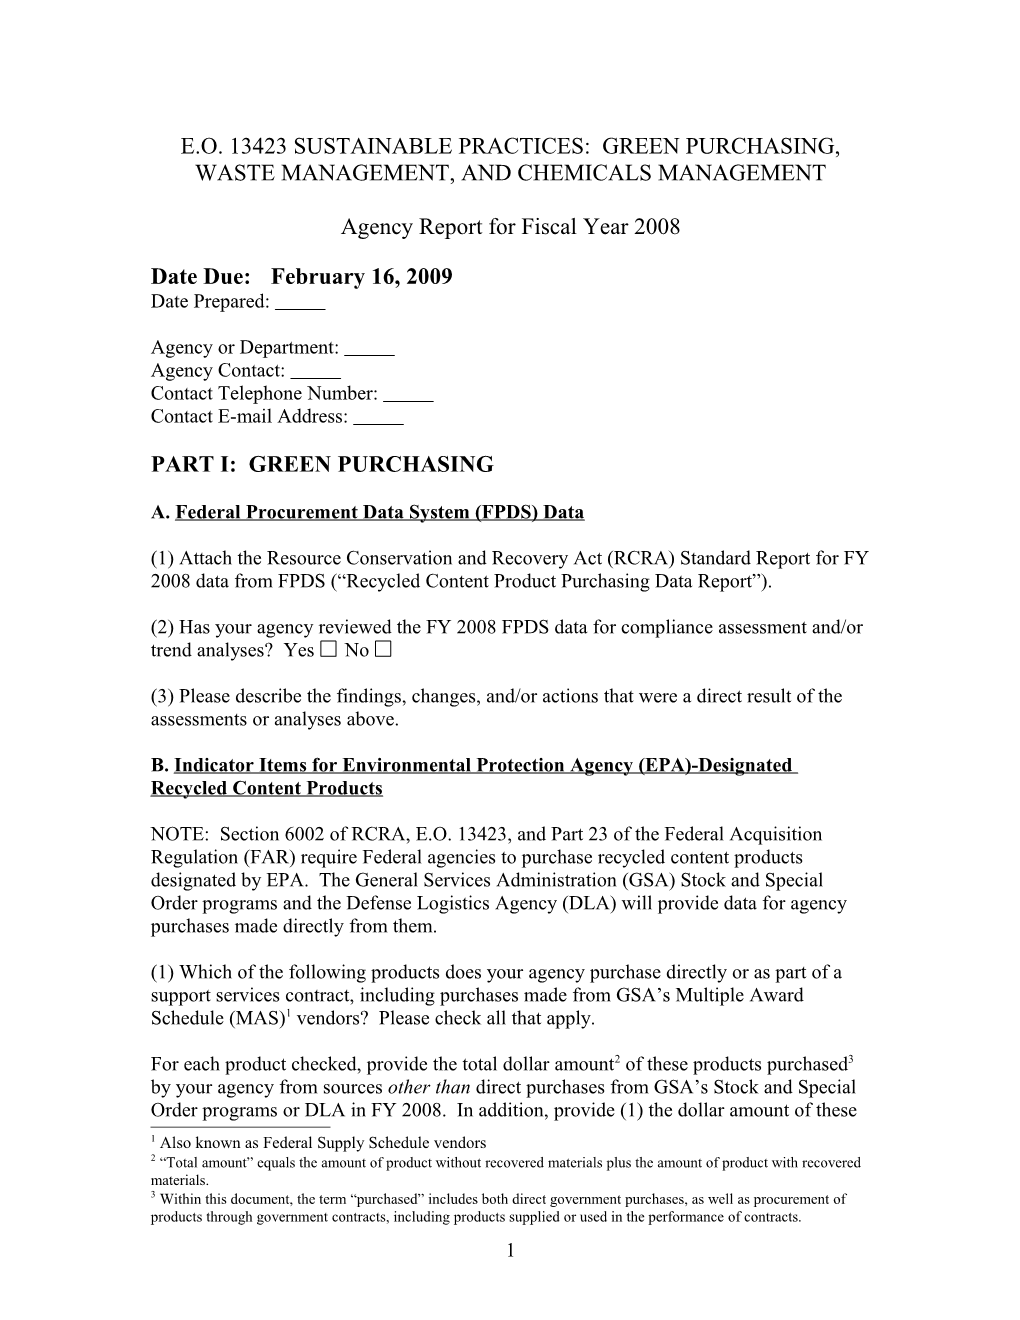 Memorandum for Federal Agency Environmental Executives